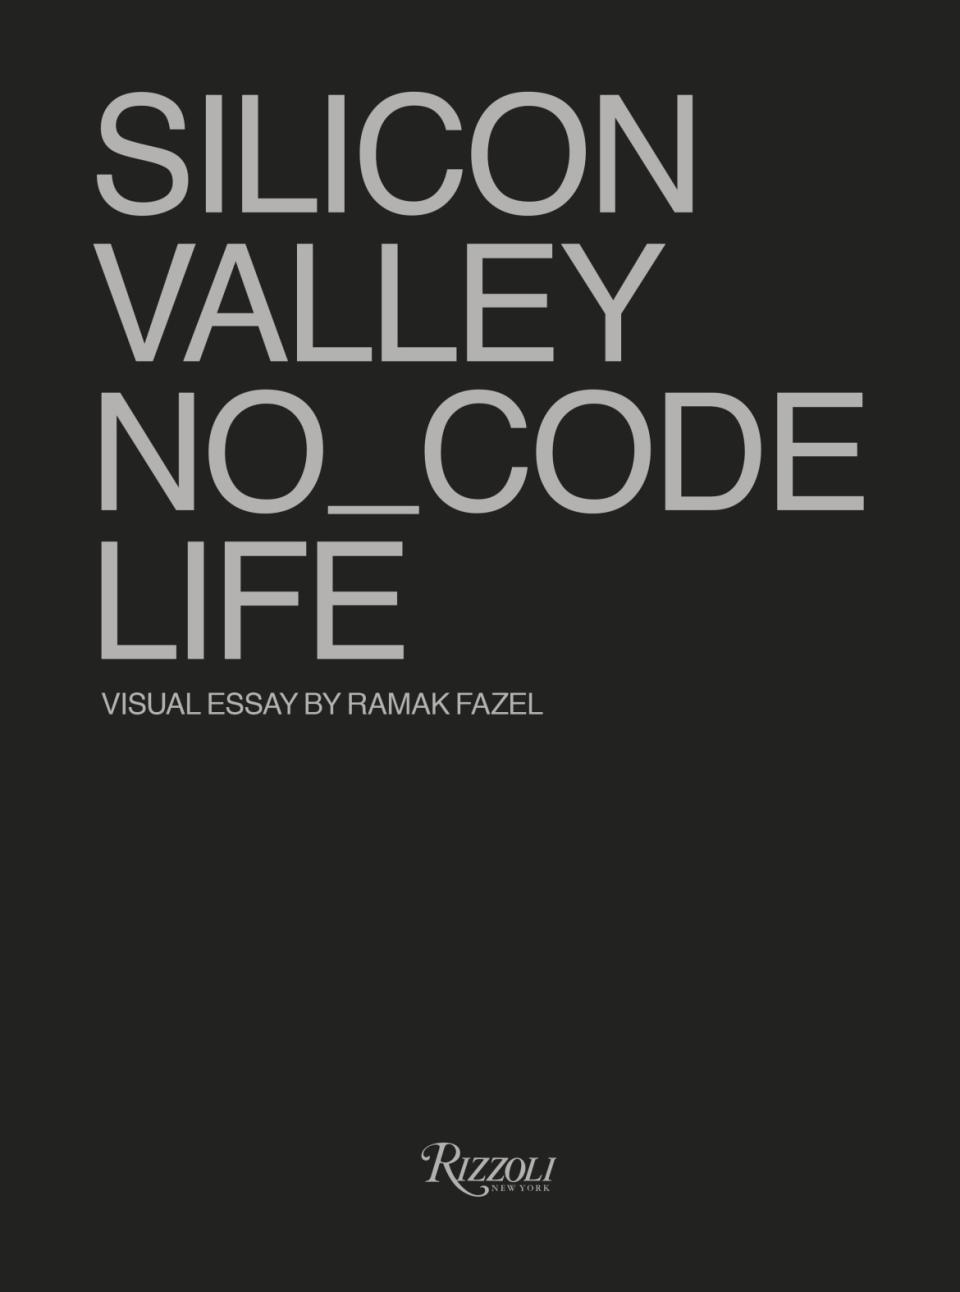 <div class="inline-image__caption"><p><a href="https://www.rizzoliusa.com/book/9788891829535/" rel="nofollow noopener" target="_blank" data-ylk="slk:Silicon Valley No_Code Life ($60);elm:context_link;itc:0;sec:content-canvas" class="link "><em><strong>Silicon Valley No_Code Life ($60)</strong></em></a></p></div> <div class="inline-image__credit">Rizzoli</div>